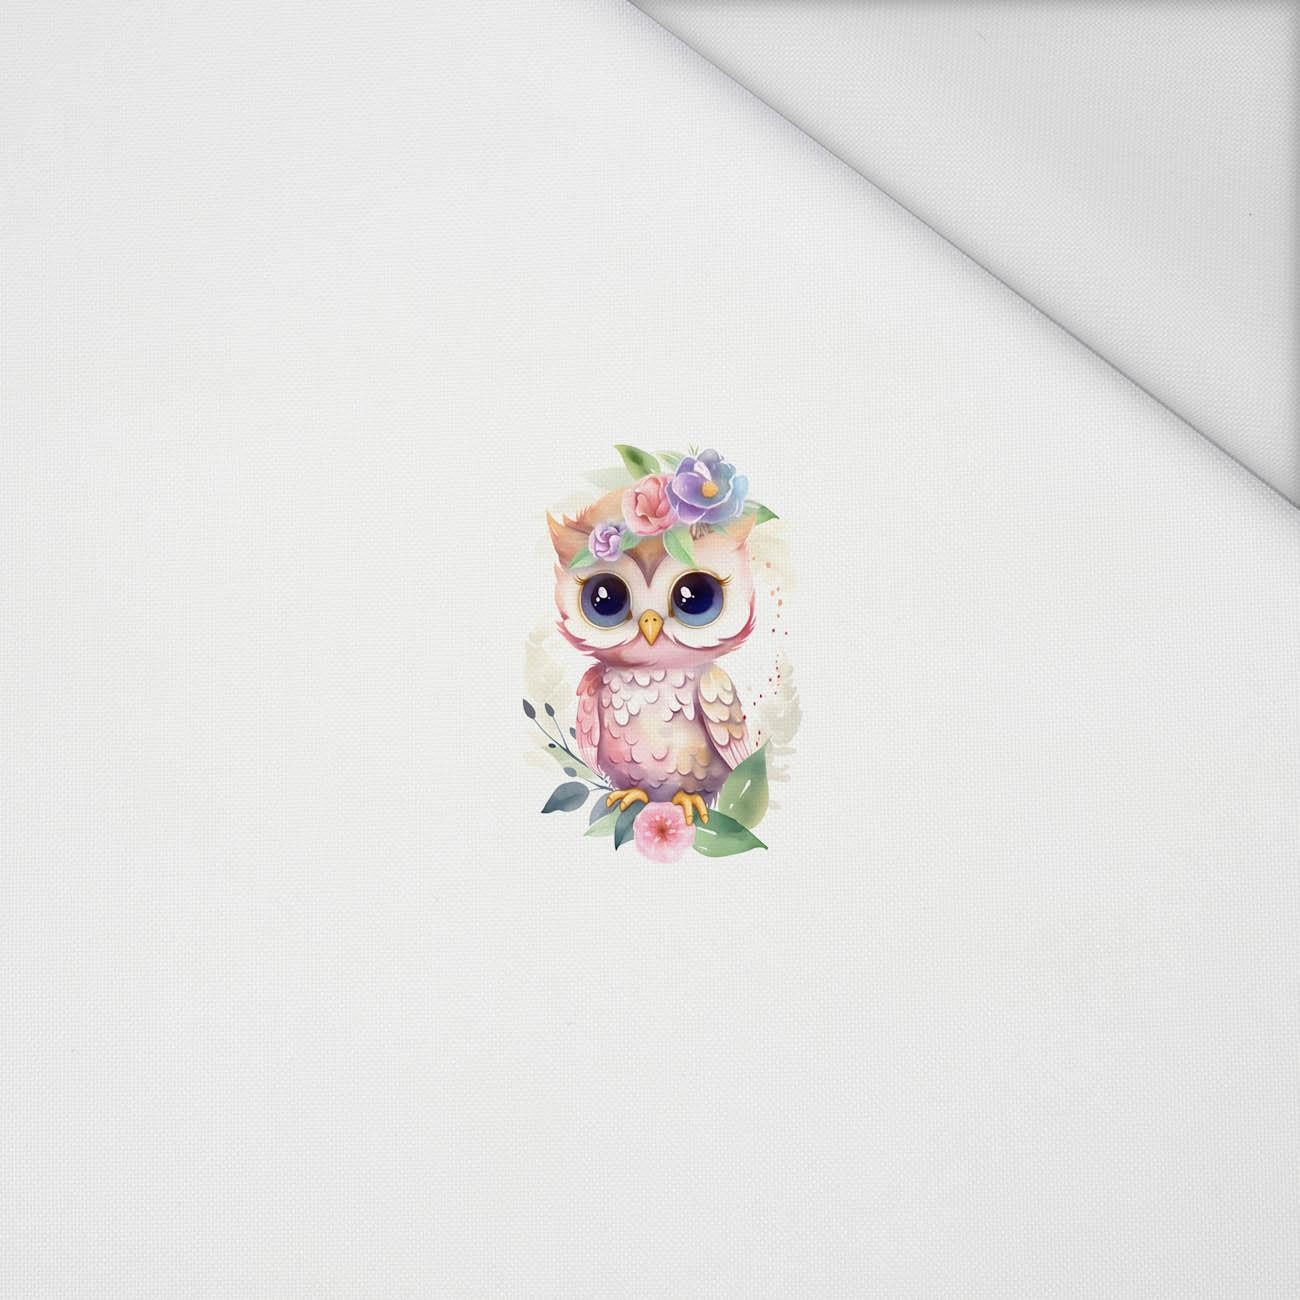 BABY OWL - panel (60cm x 50cm) Waterproof woven fabric